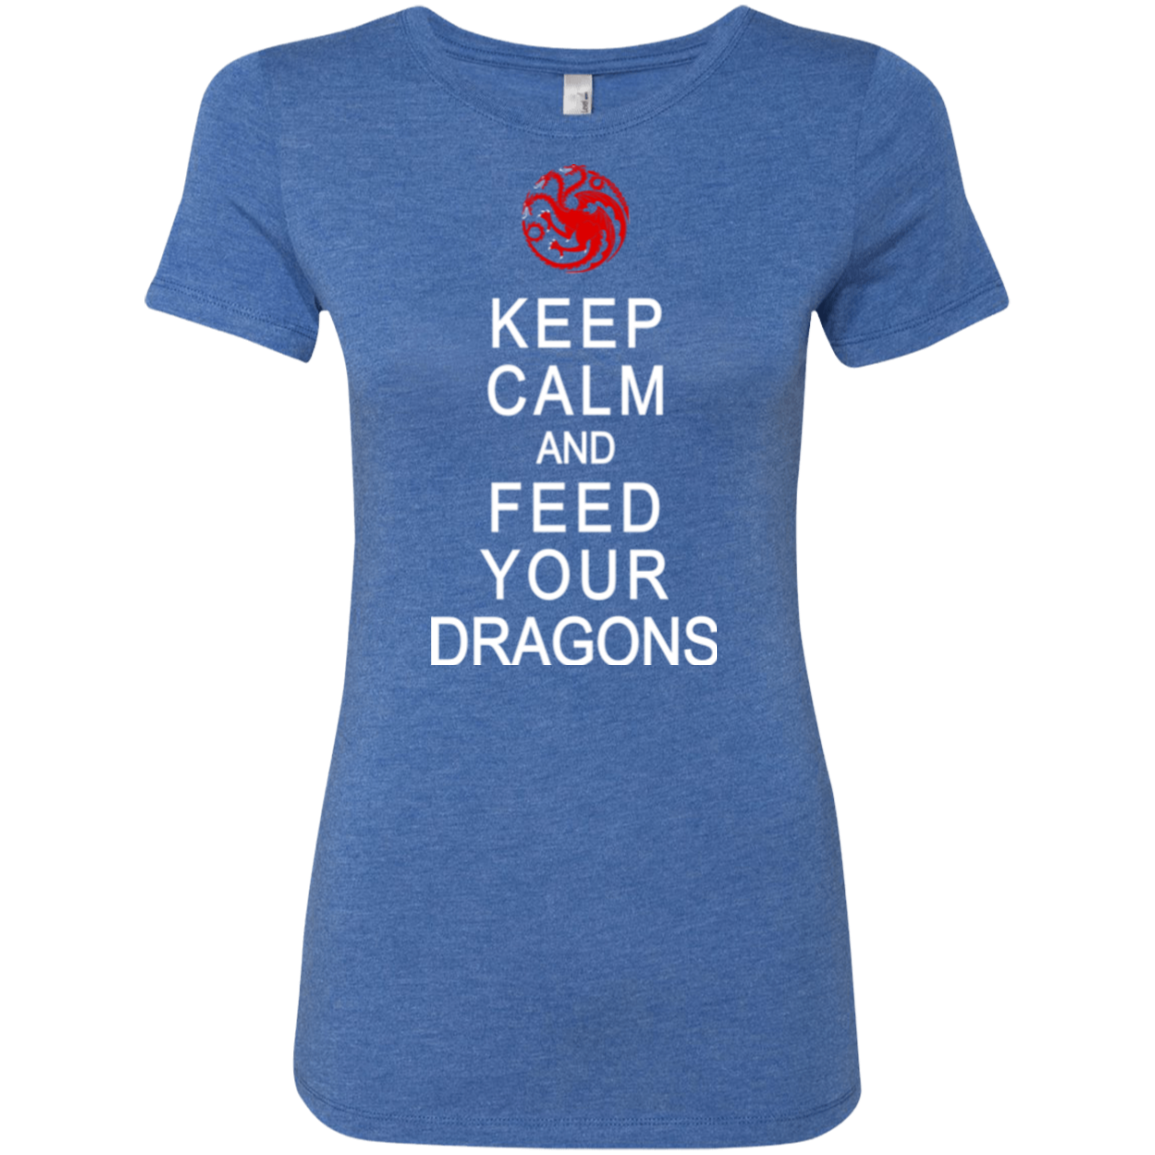 Feed dragons Women's Triblend T-Shirt